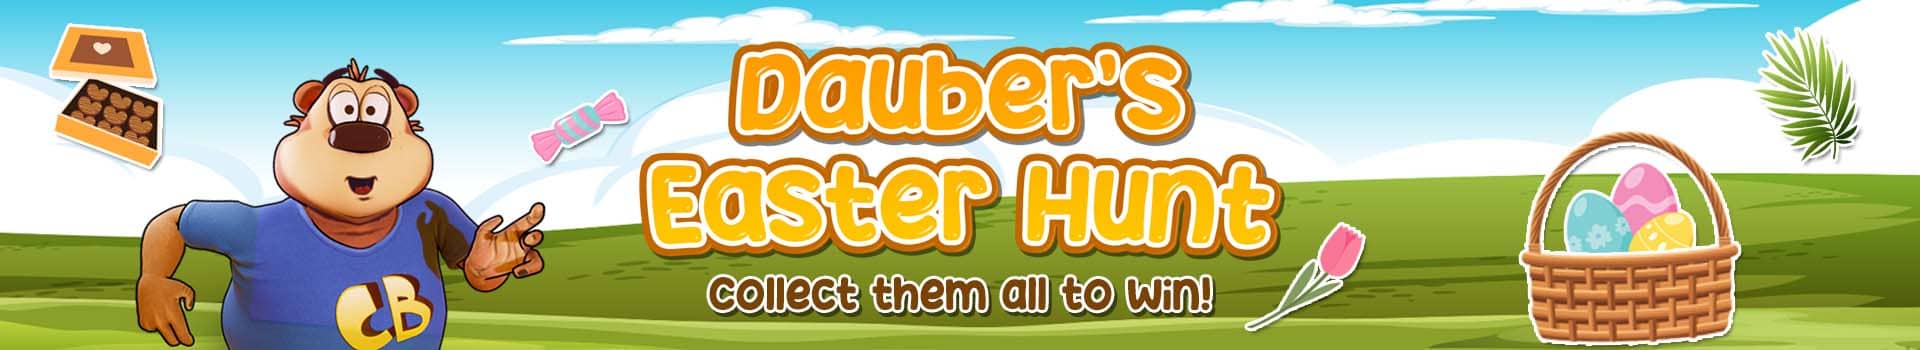 daubers-easter-hunt- Banner